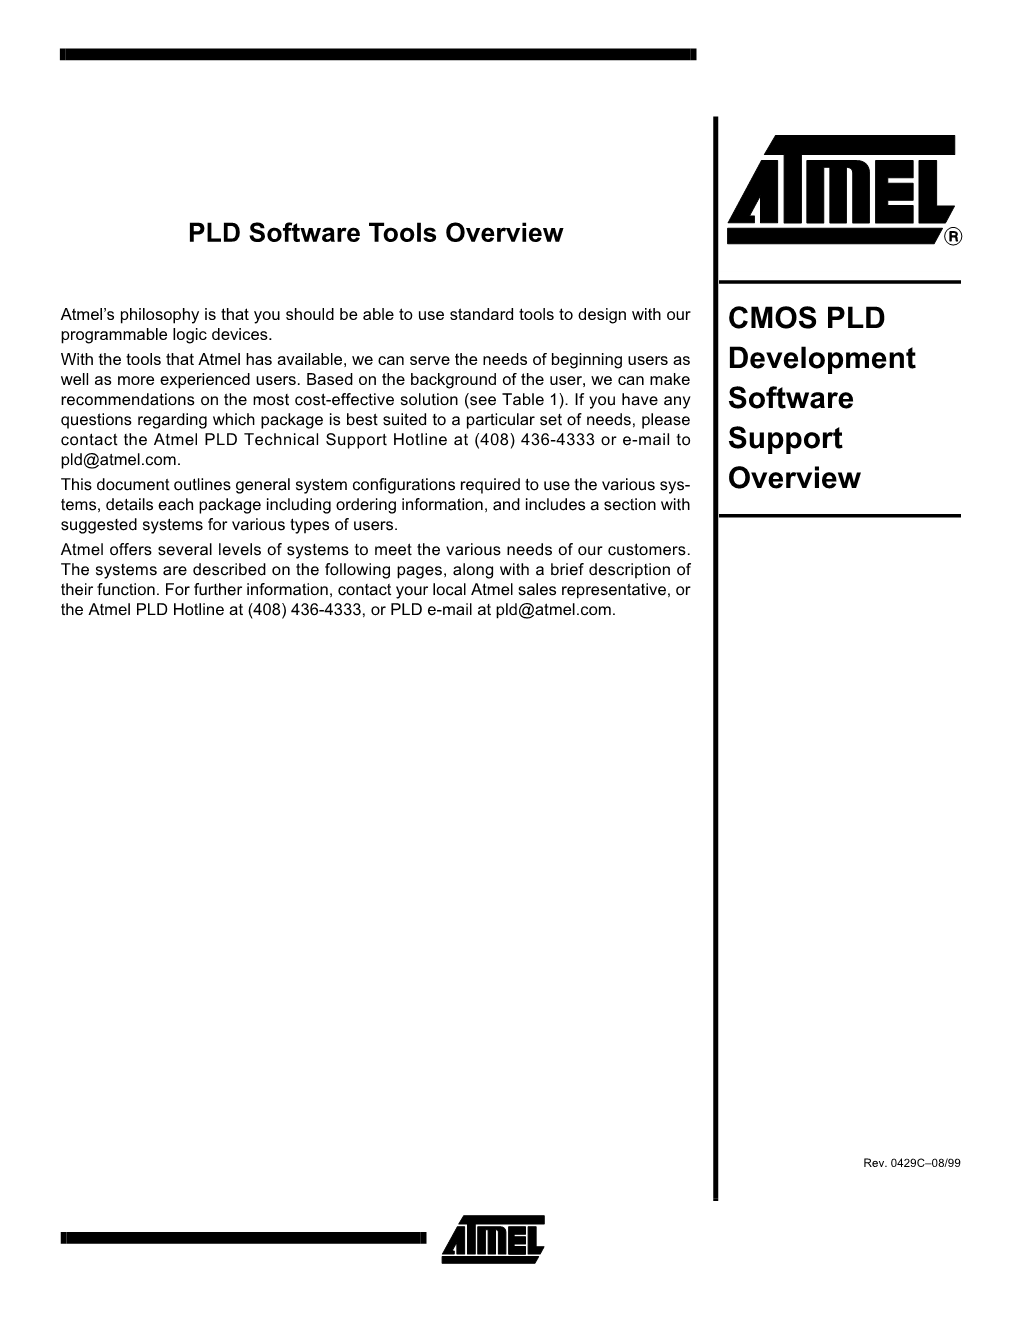 CMOS PLD Development Software Support Overview